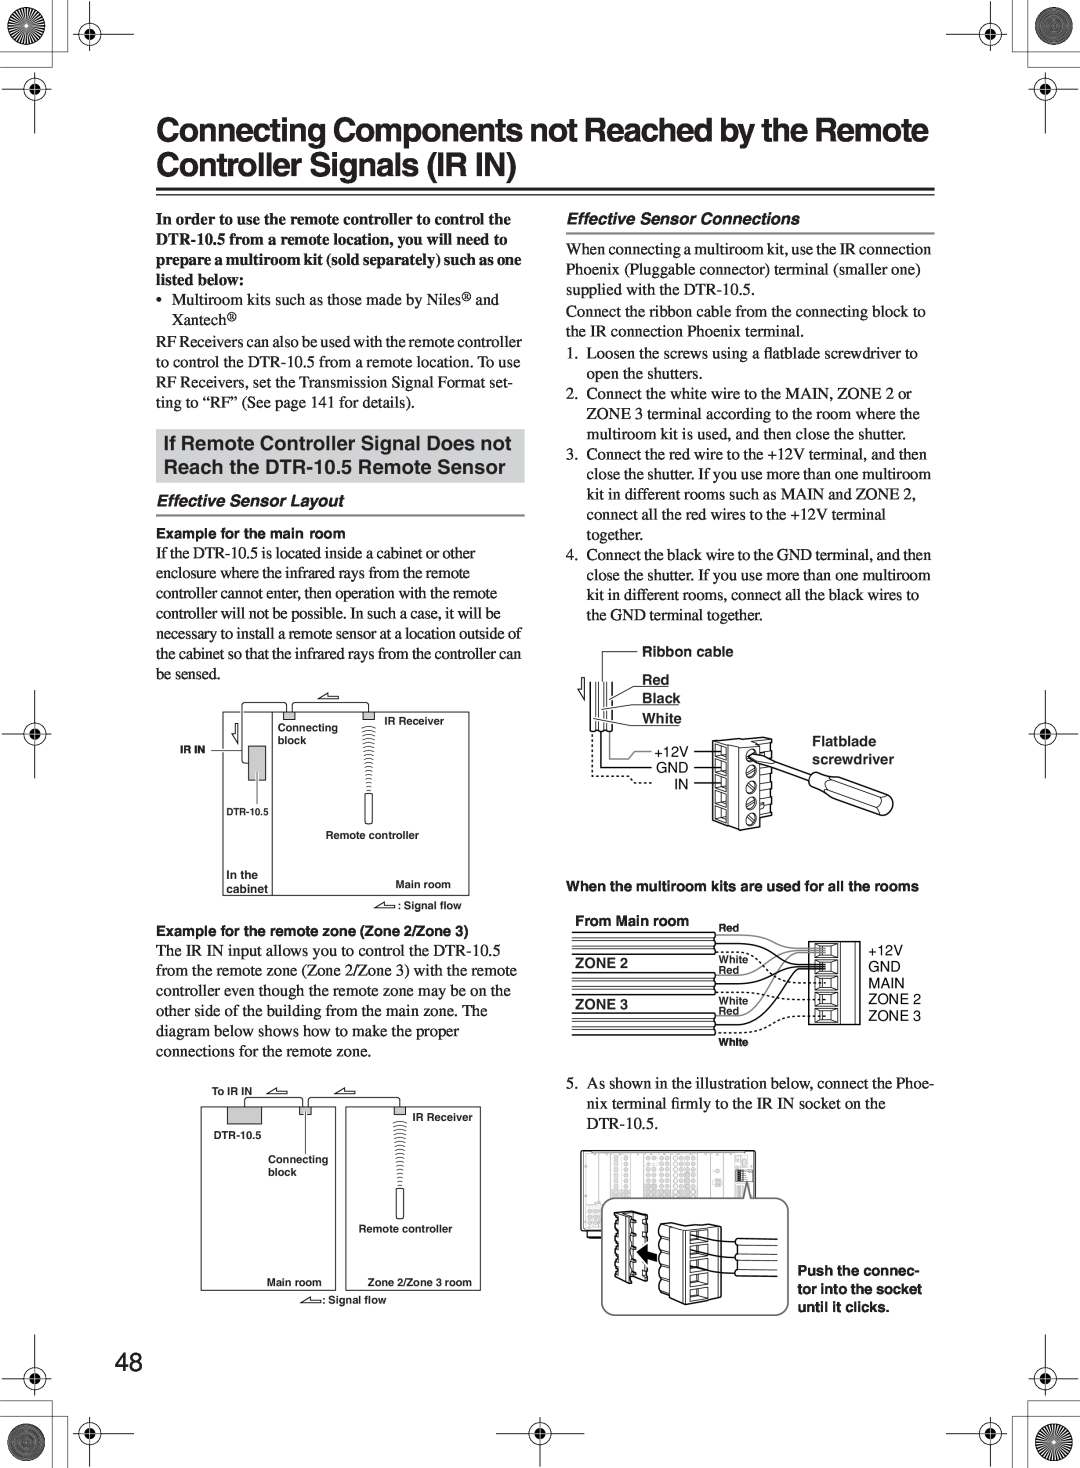 Integra DTR-10.5 instruction manual Effective Sensor Layout, Effective Sensor Connections 